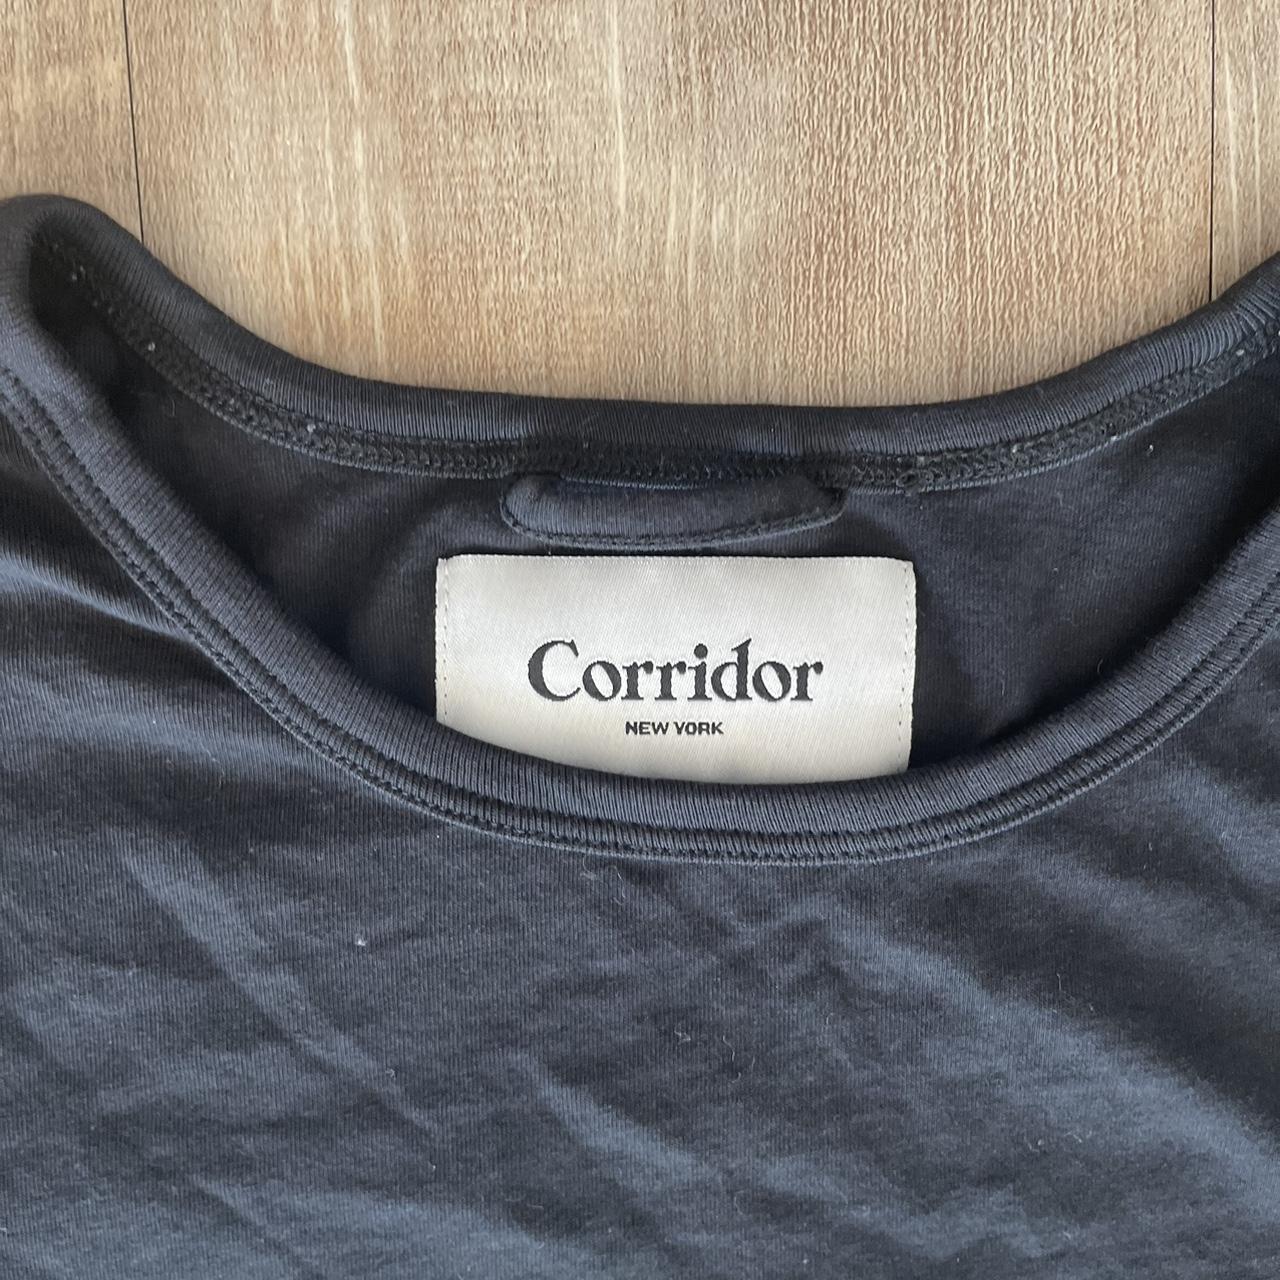 Corridor Men's Black T-shirt (2)